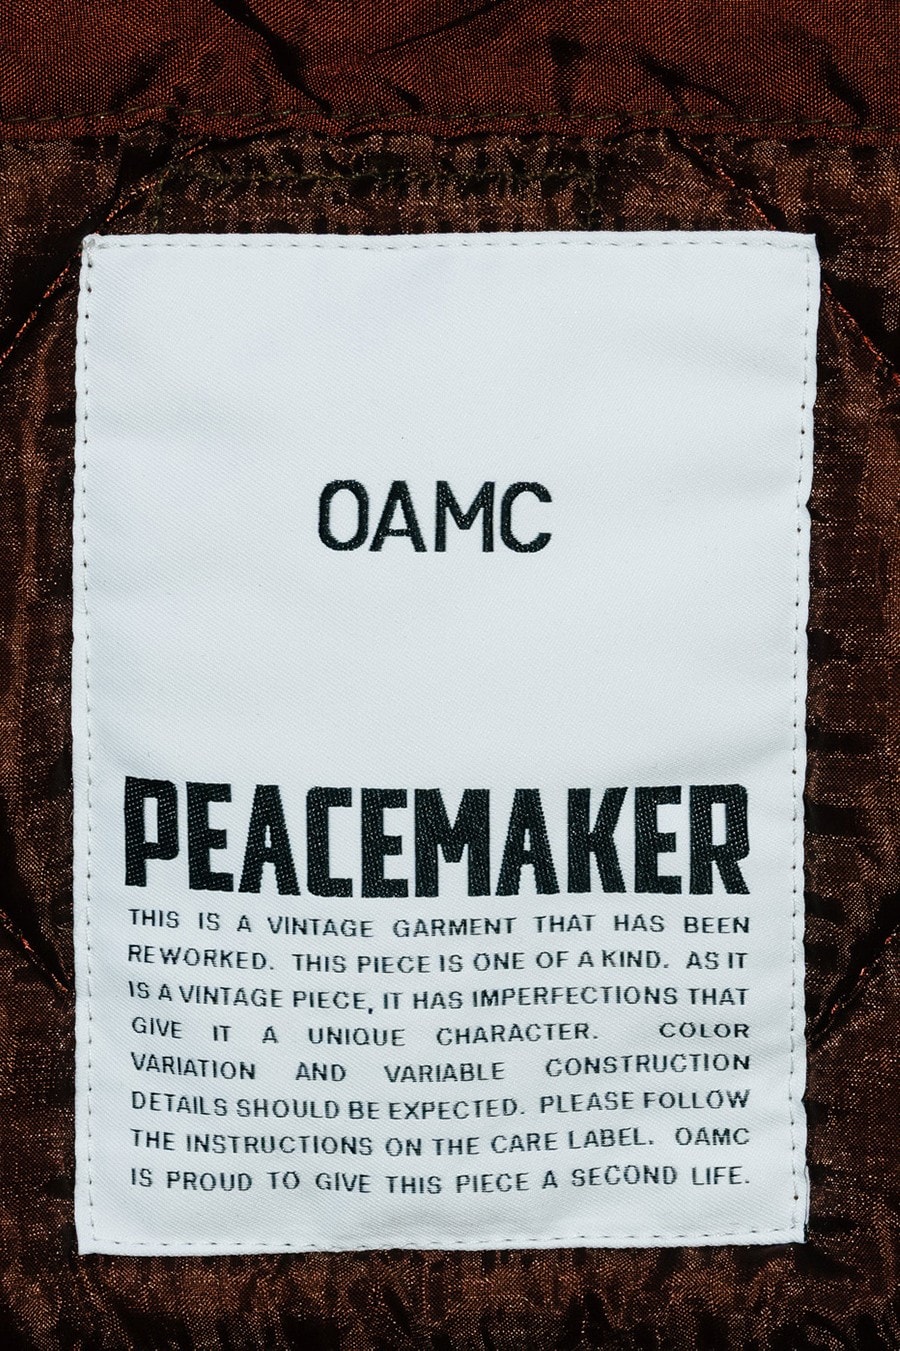 OAMC 全新「DOT Peacemaker Liner」夾克限量登場